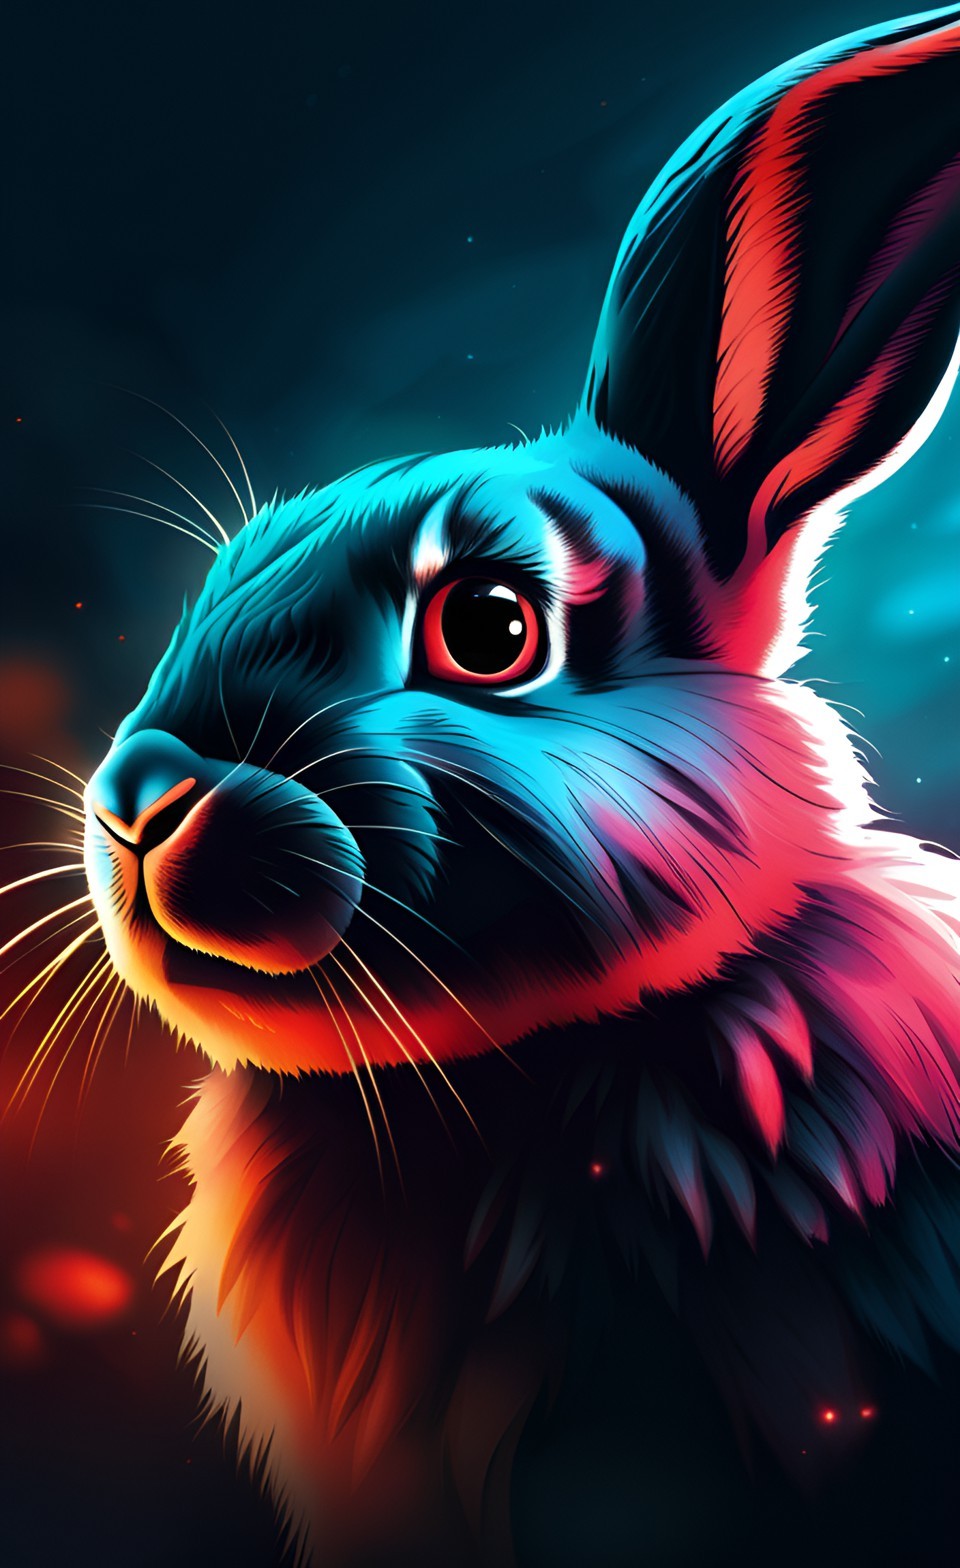 The Rabbit iPhone Wallpaper 4K